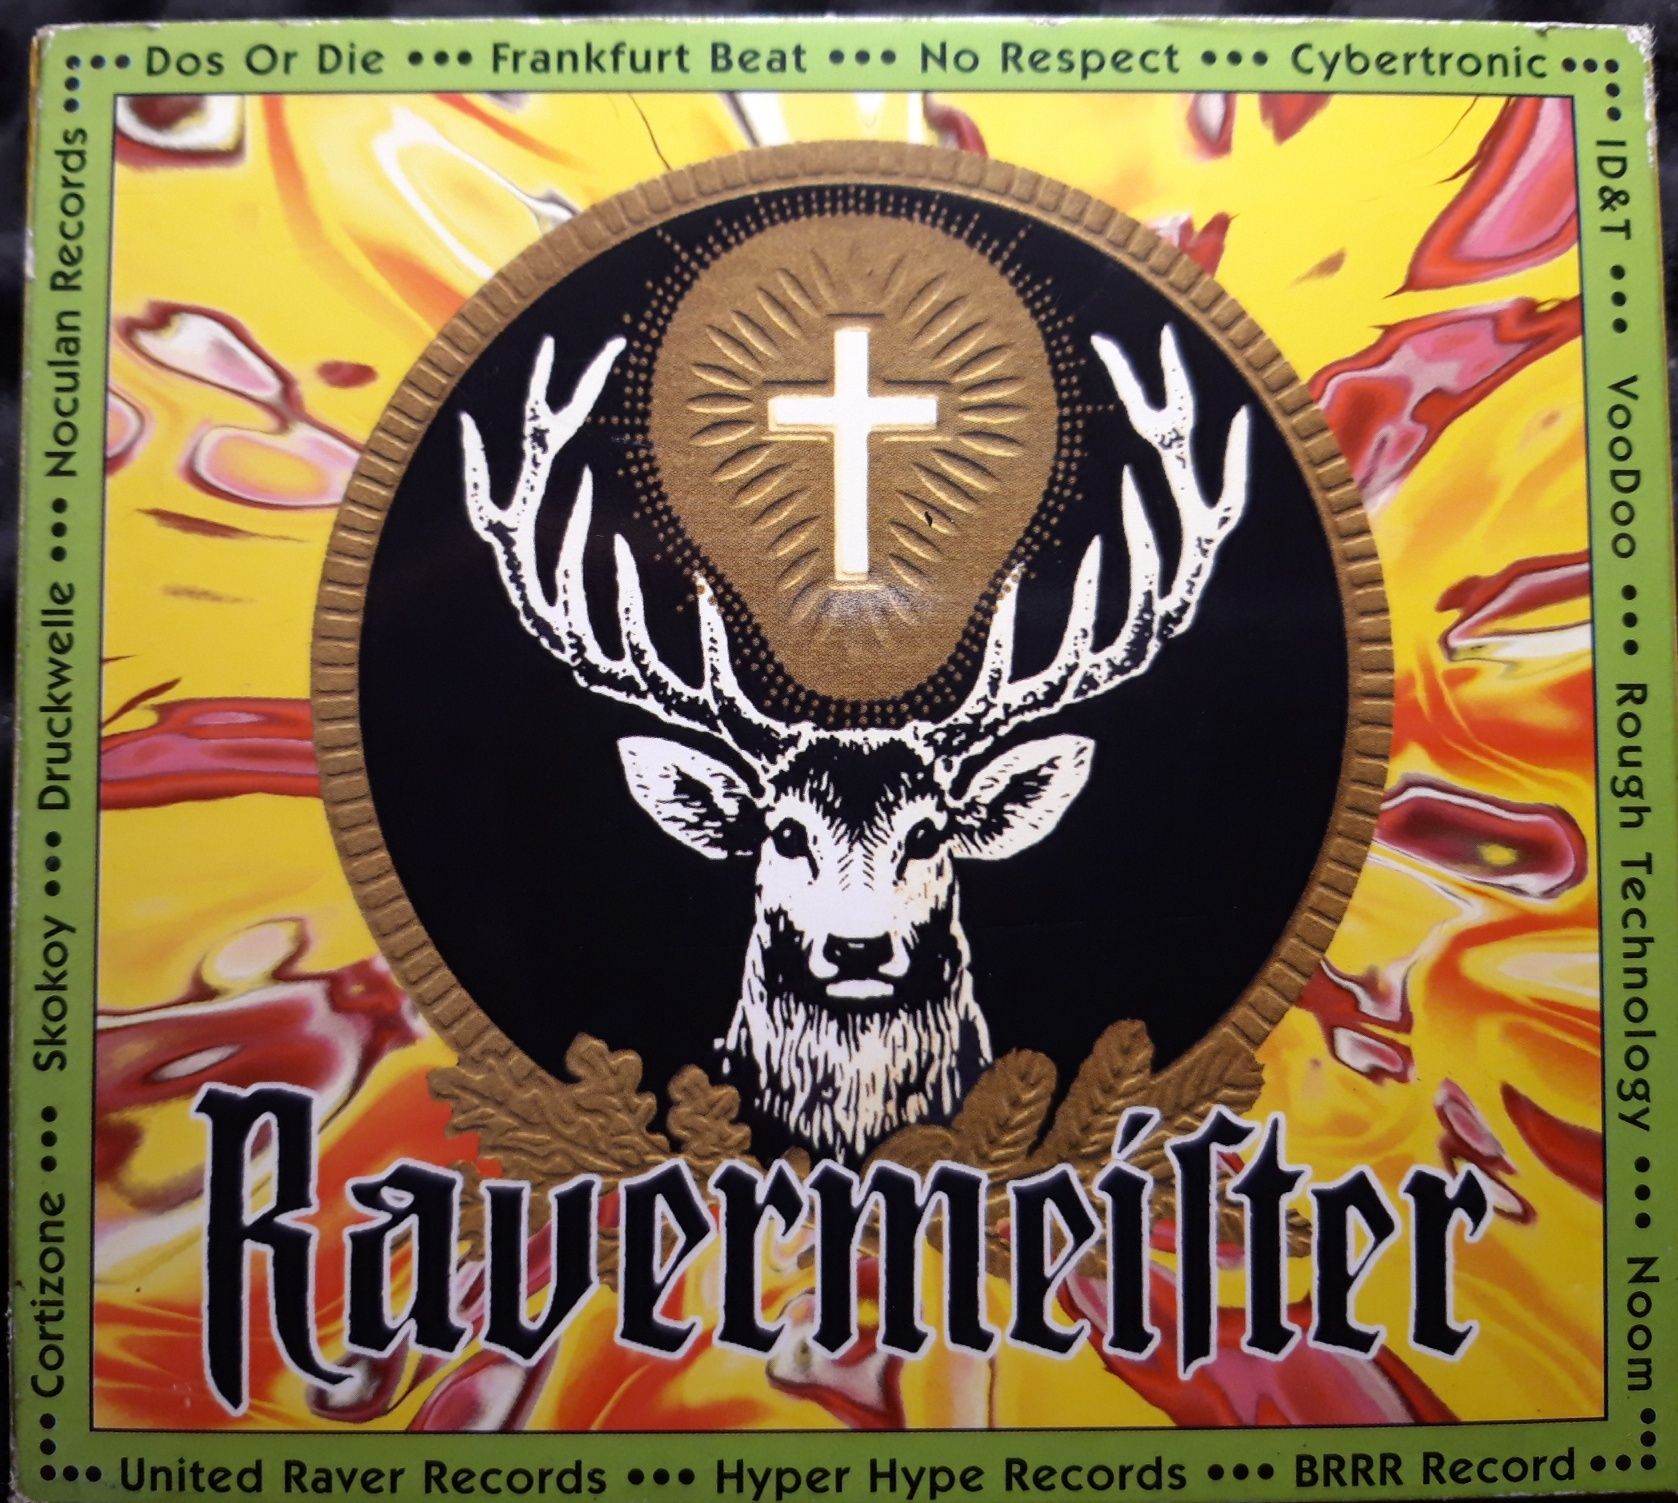 Ravermeister Vol. II (2xCD, 1995)